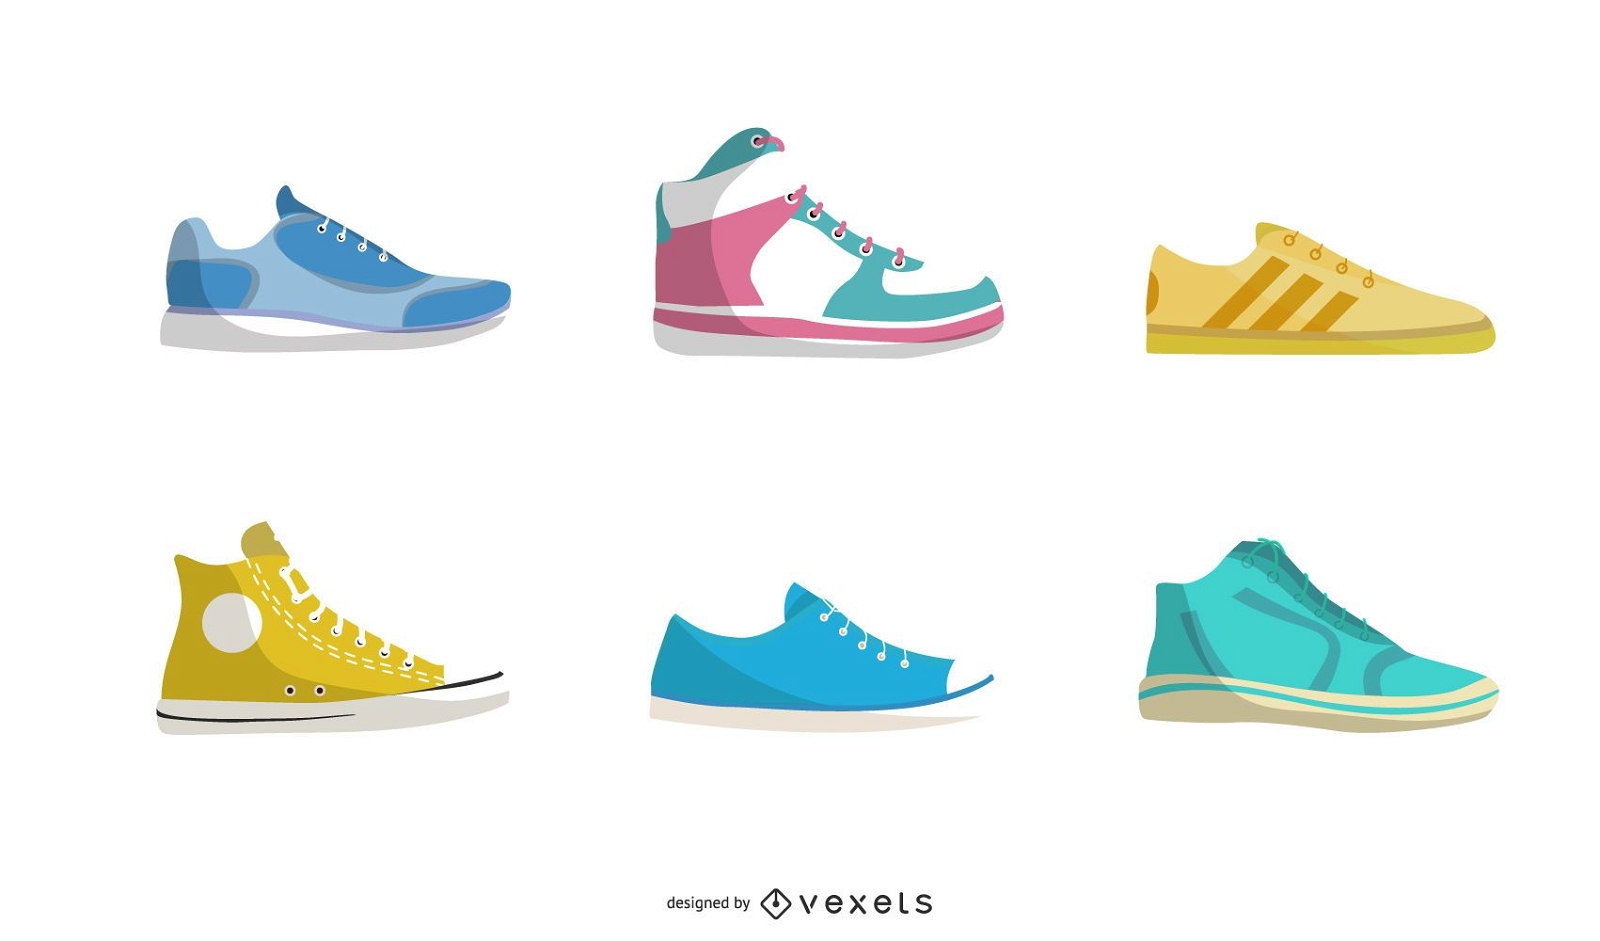 sapatos fashion illustrator 01 vector free download